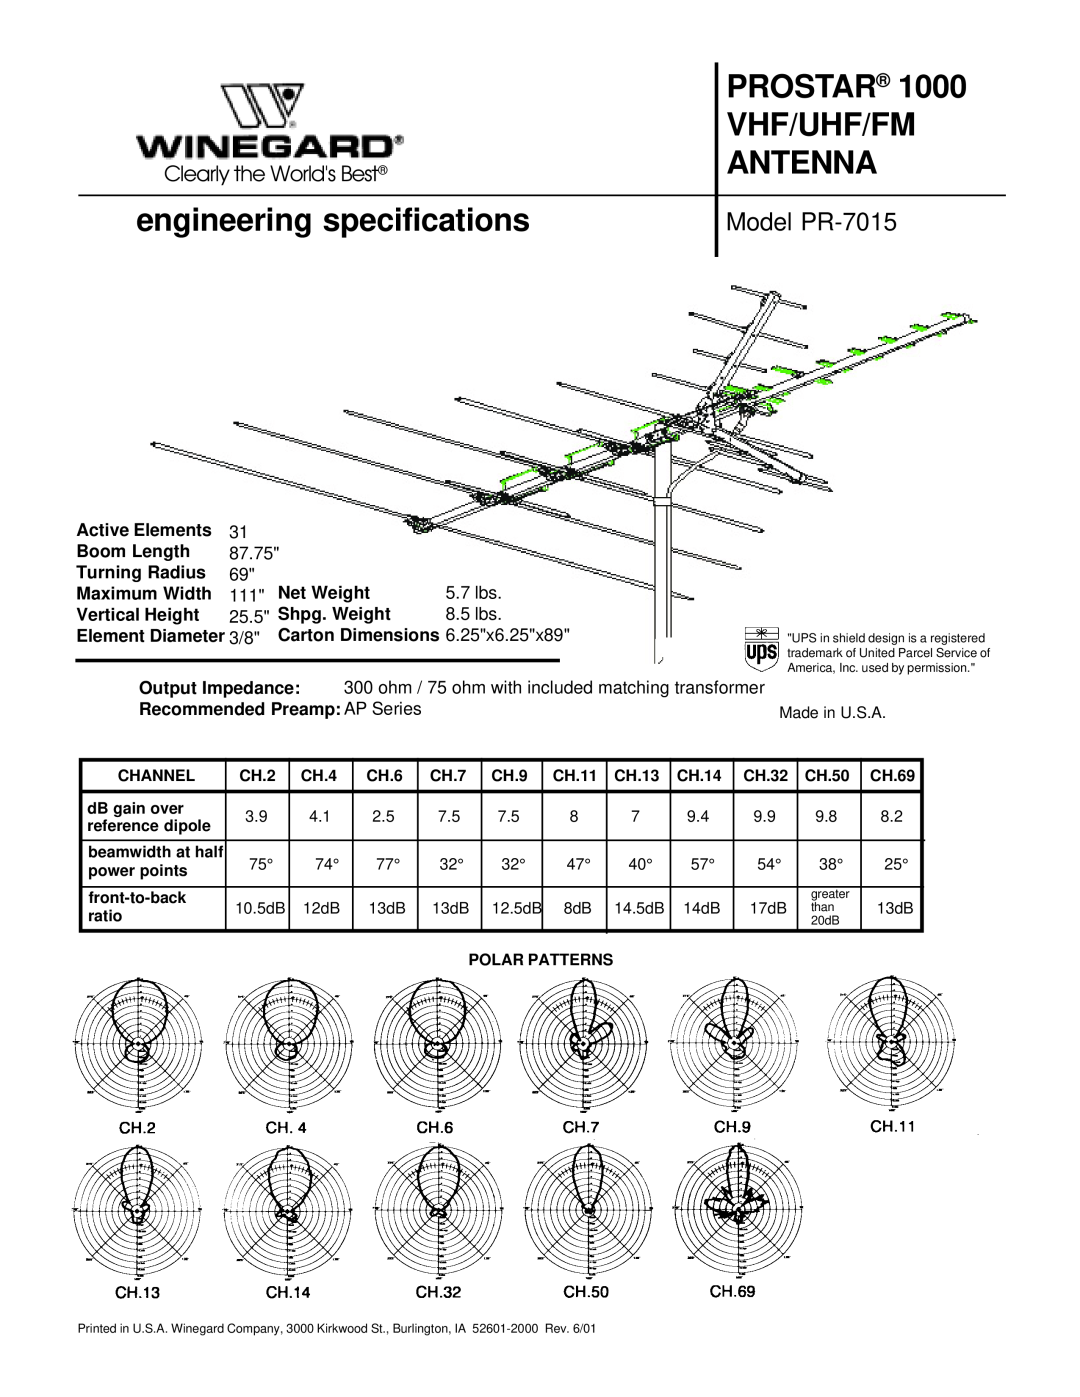 Winegard specifications Prostar, Vhf/Uhf/Fm, Antenna, engineering specifications, Model PR-7015 